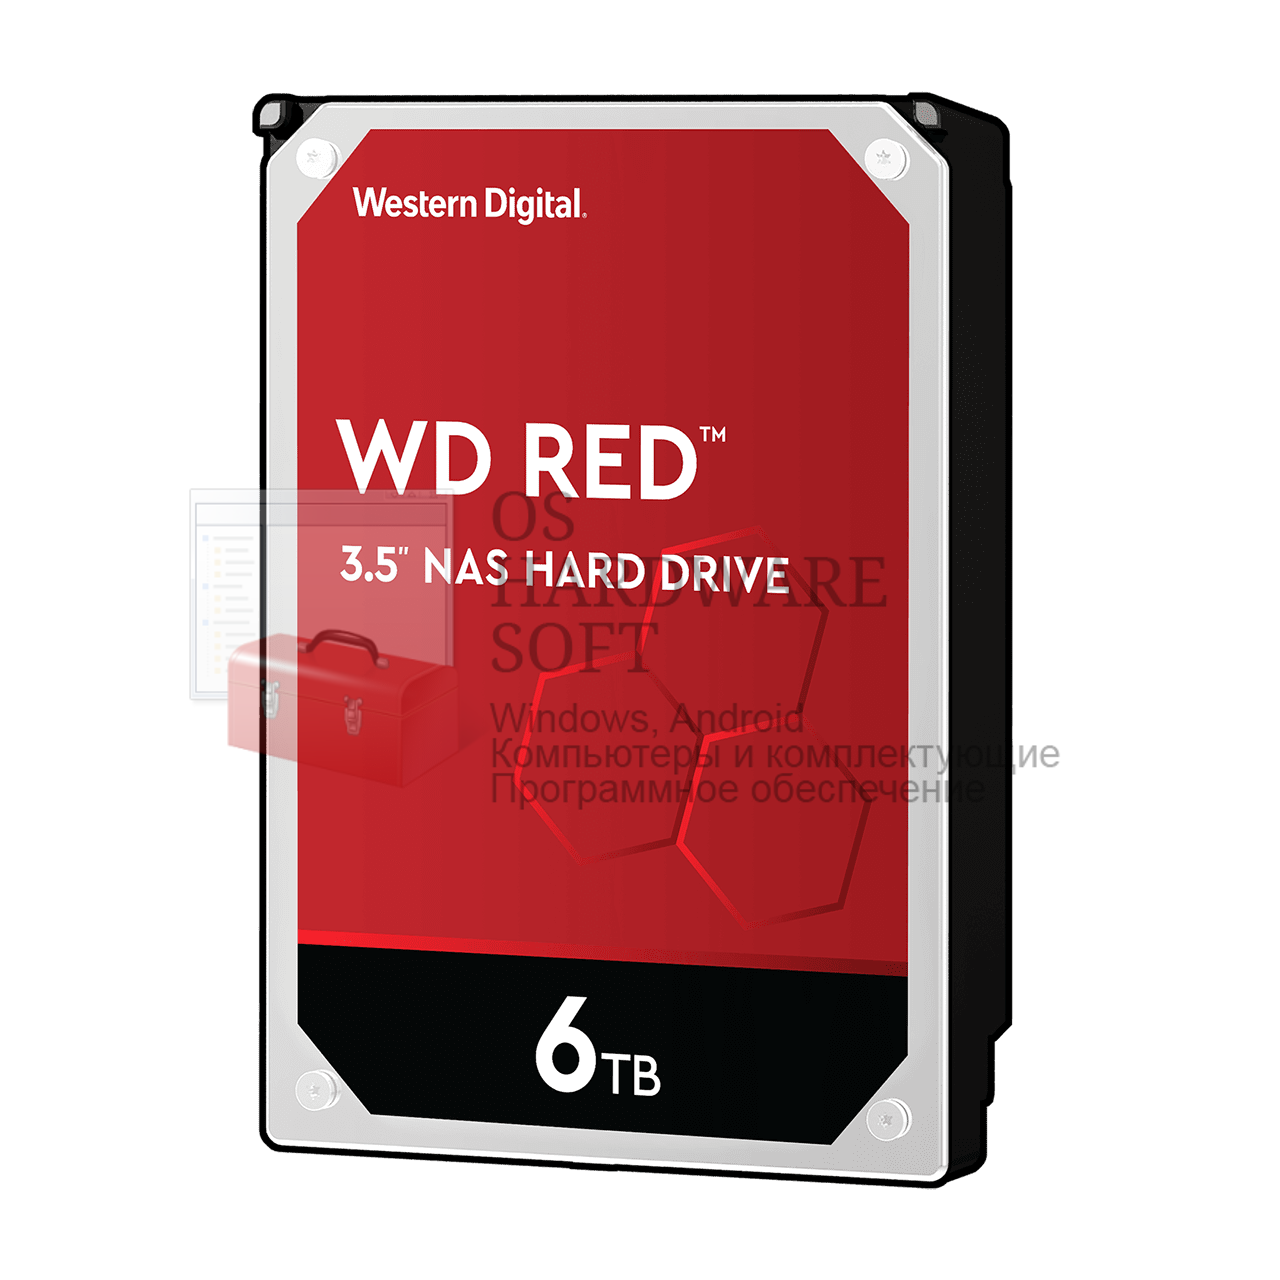 WD Red NAS Hard Drive Western Digital